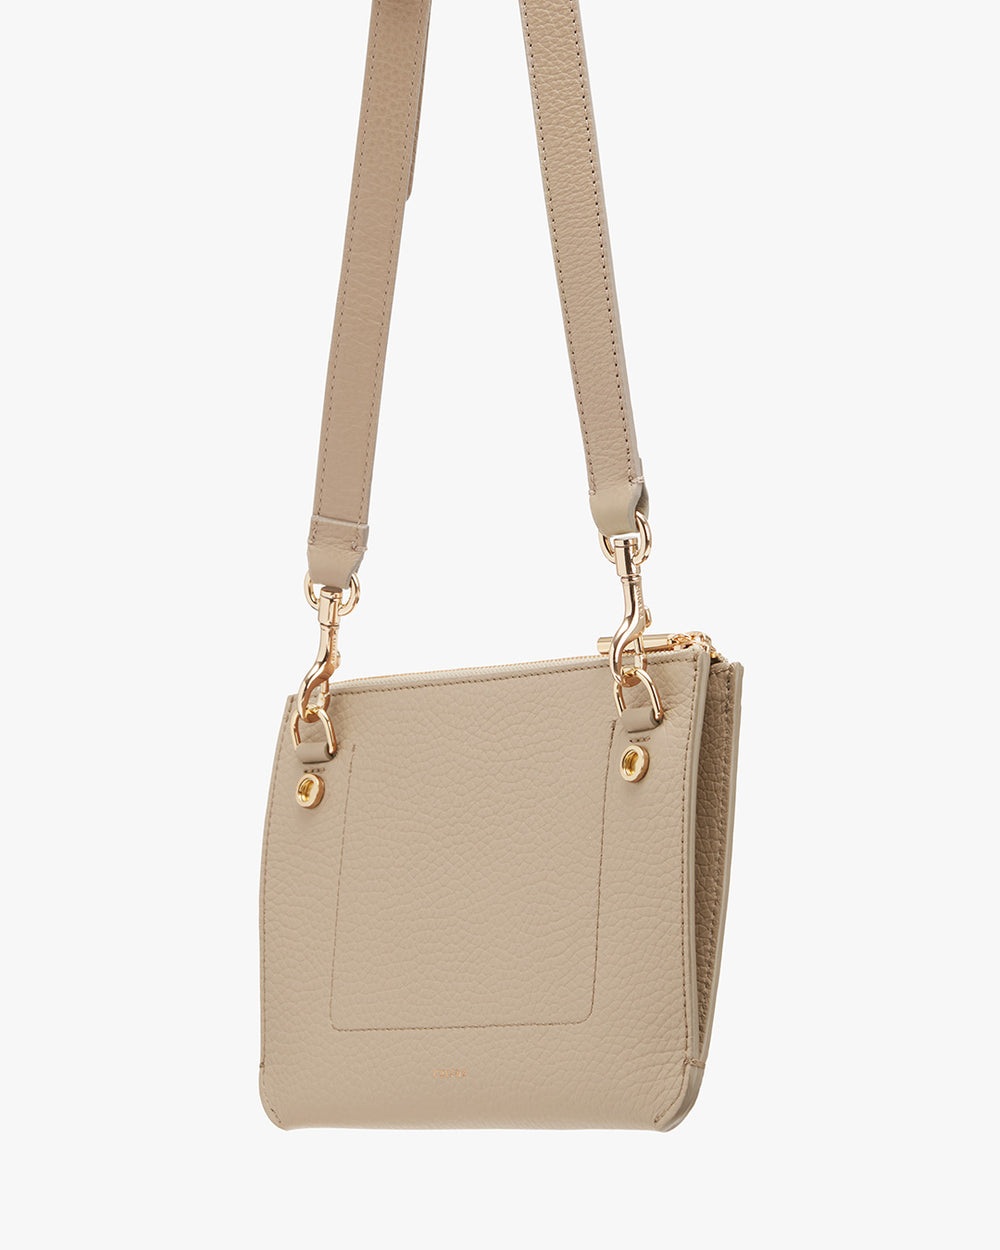 Small handbag with adjustable strap and metal clasps.